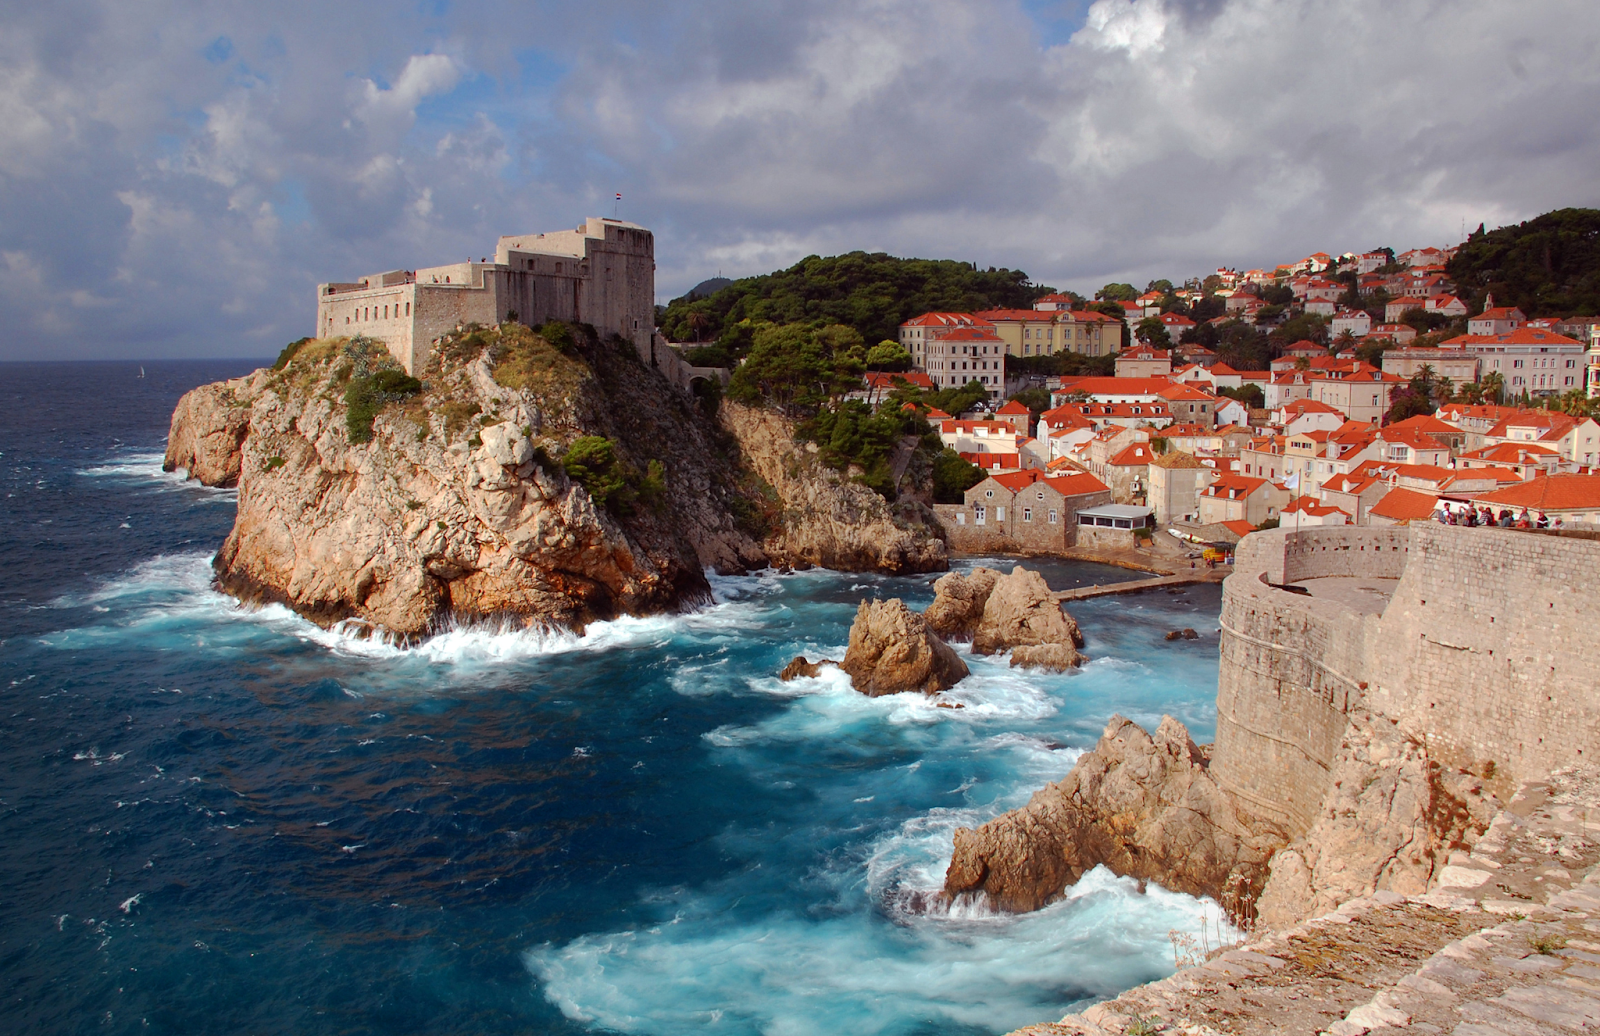 Medieval Fort Dubrovnik, Croatia